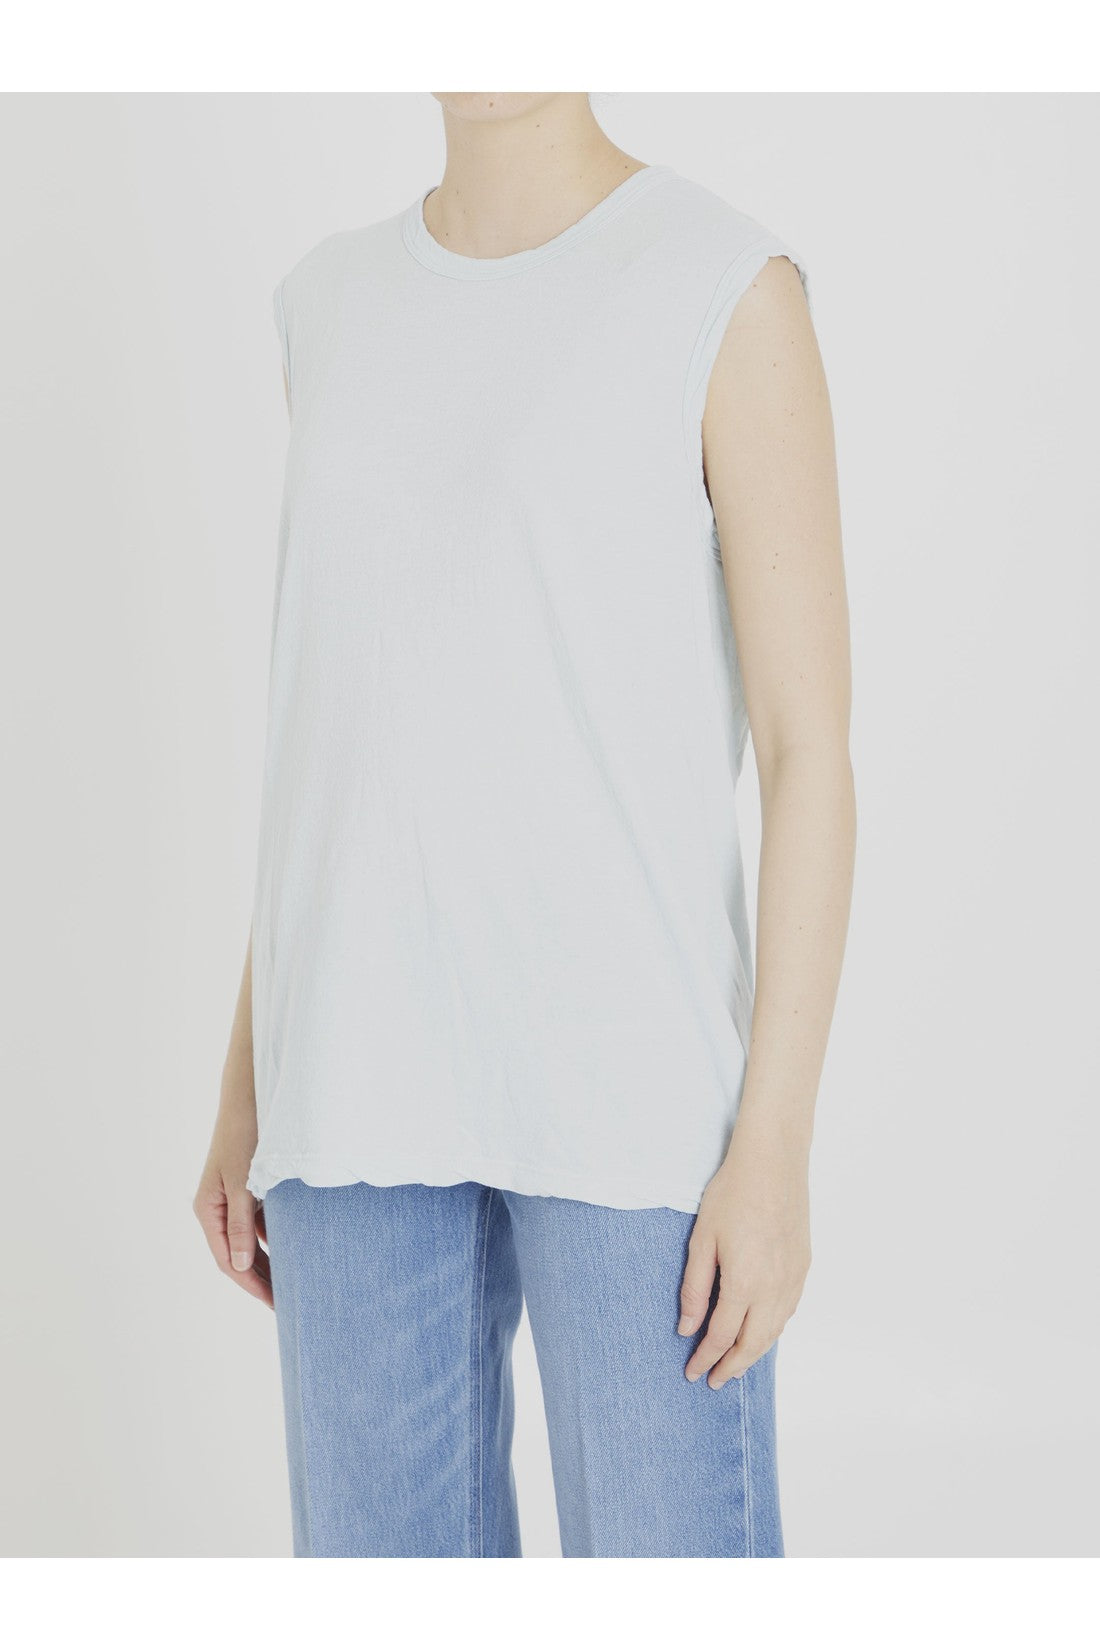 Cotton sleeveless t-shirt